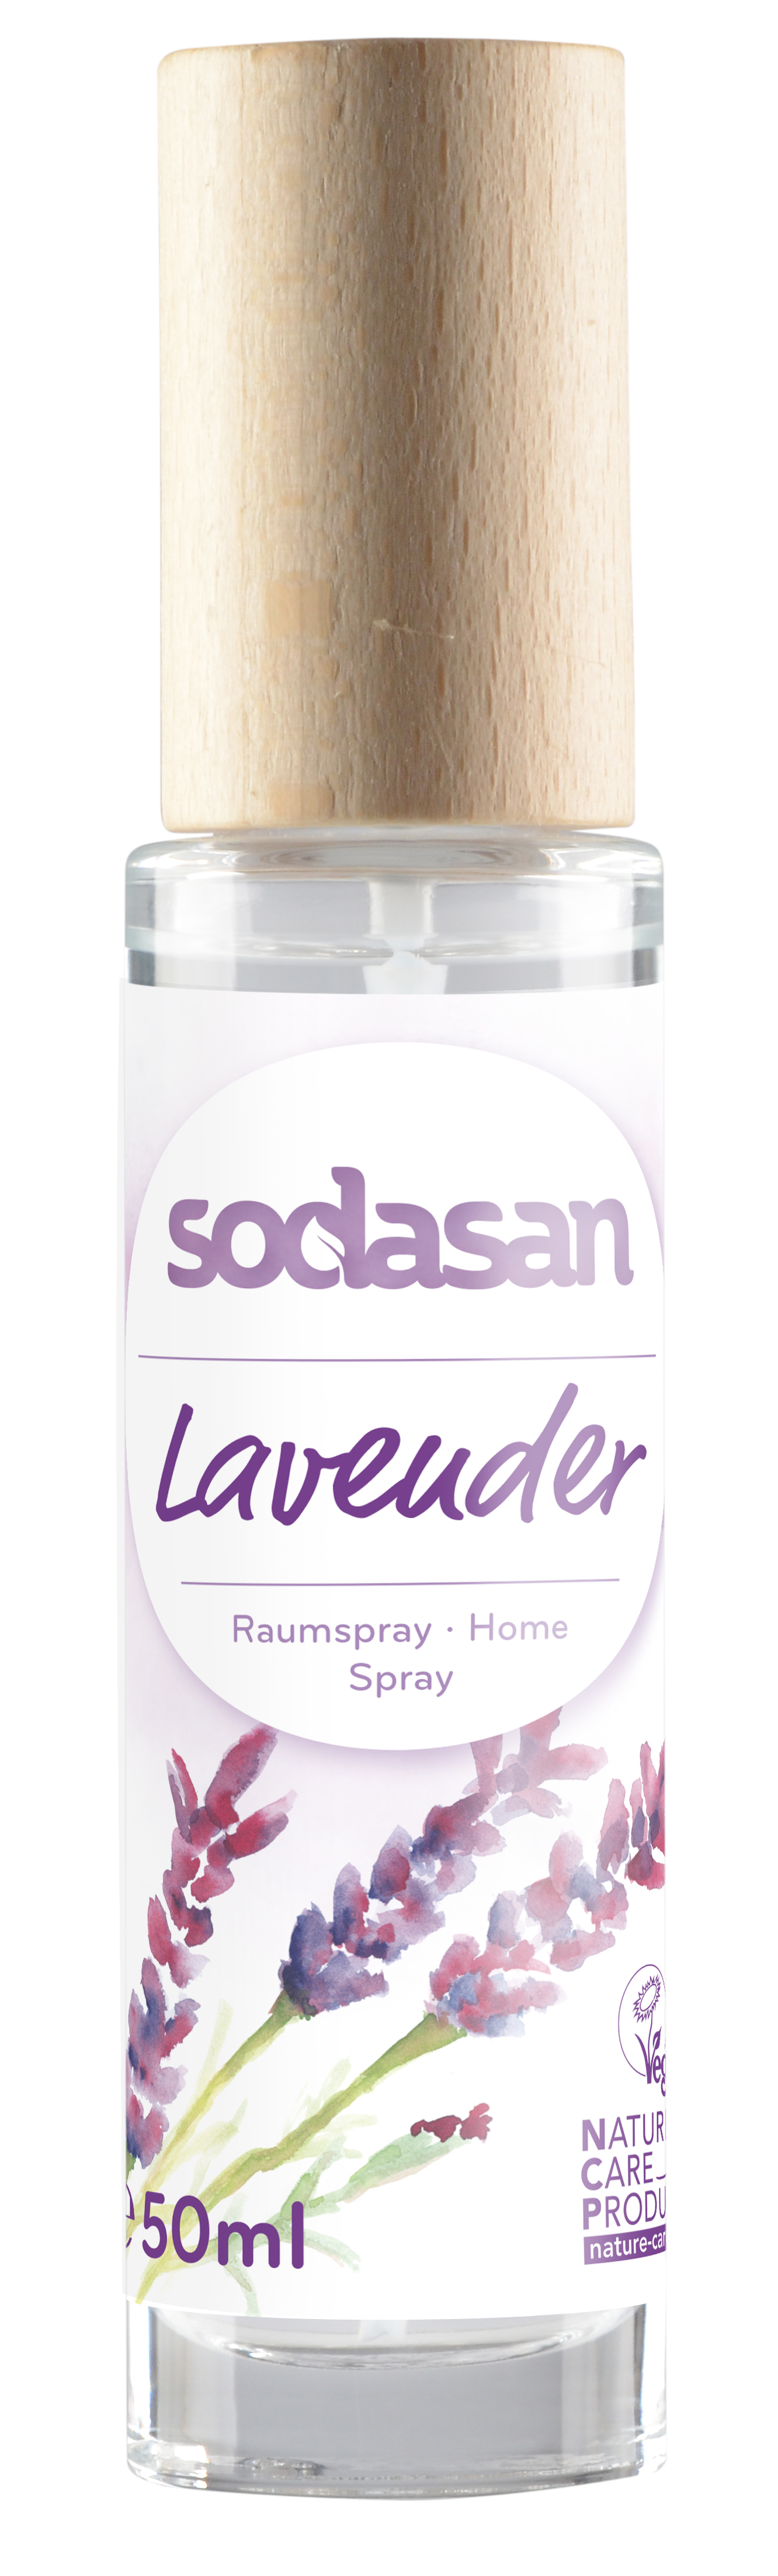 Raumspray Lavender